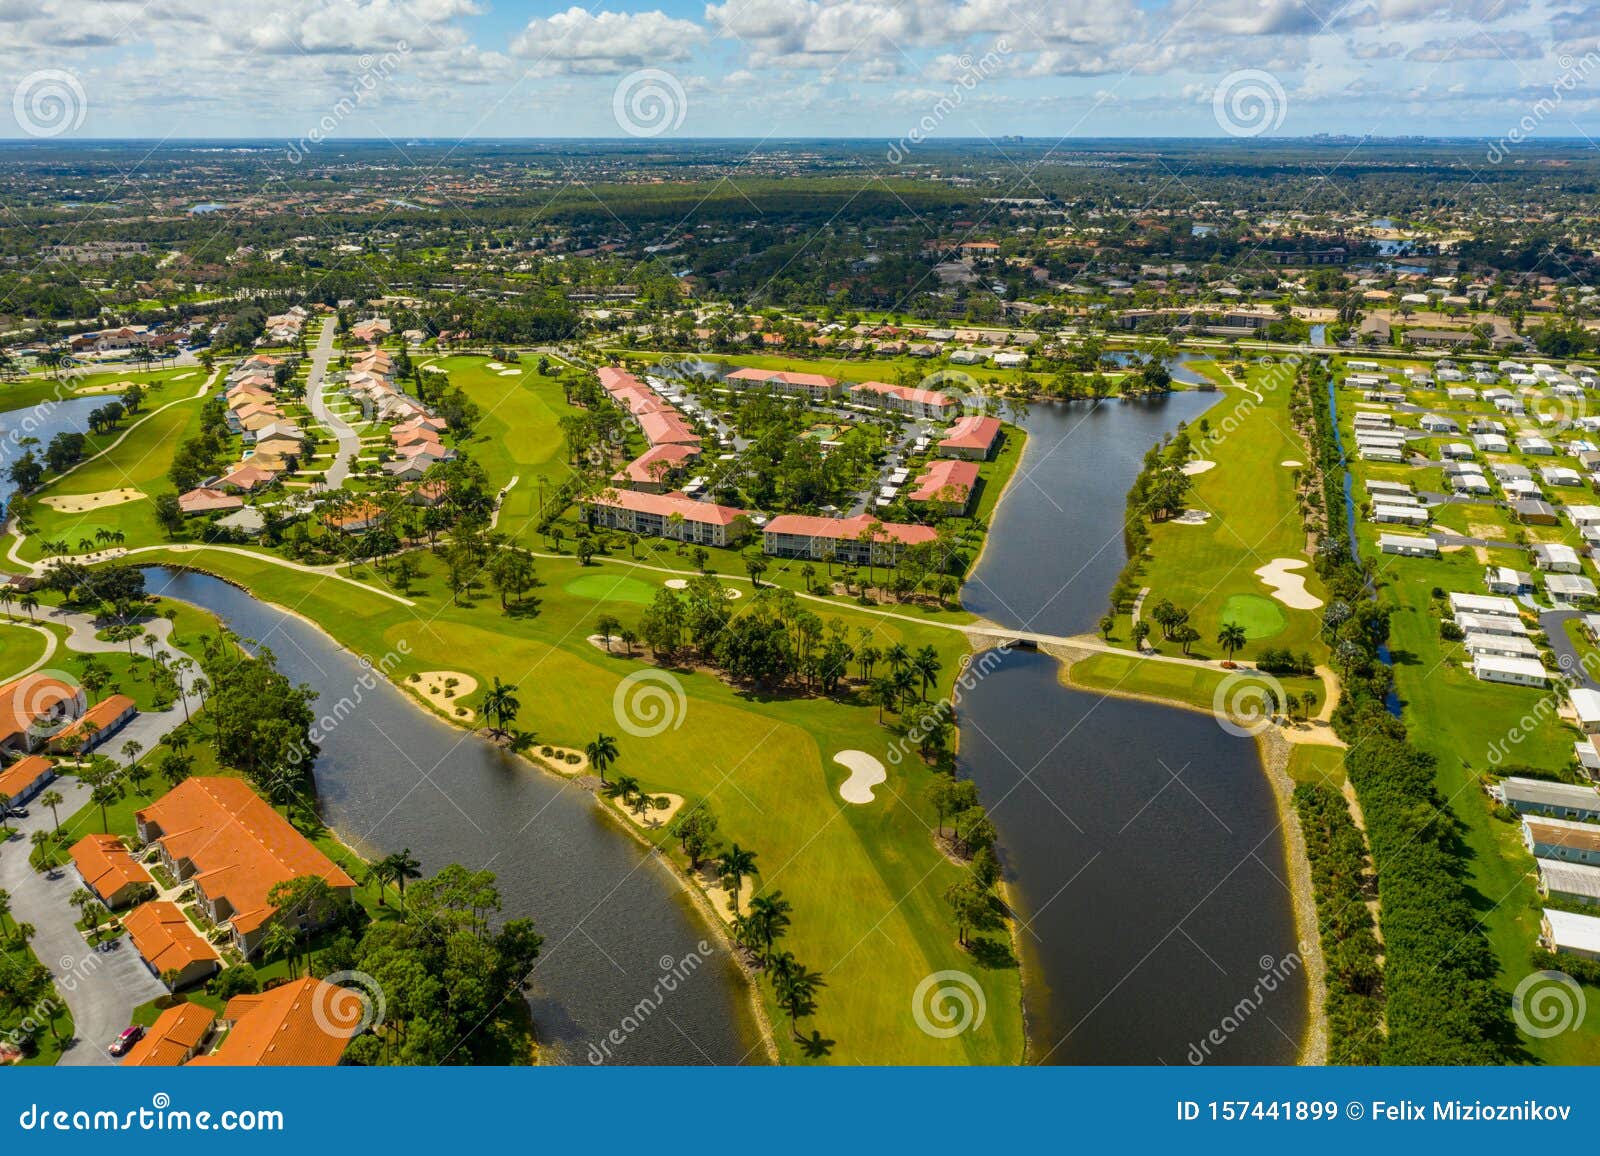 golf course neighborhoods in naples florida usa